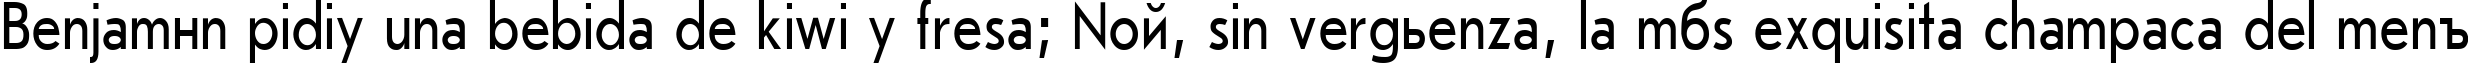 Пример написания шрифтом Journal SansSerif Plain:001.00180n текста на испанском